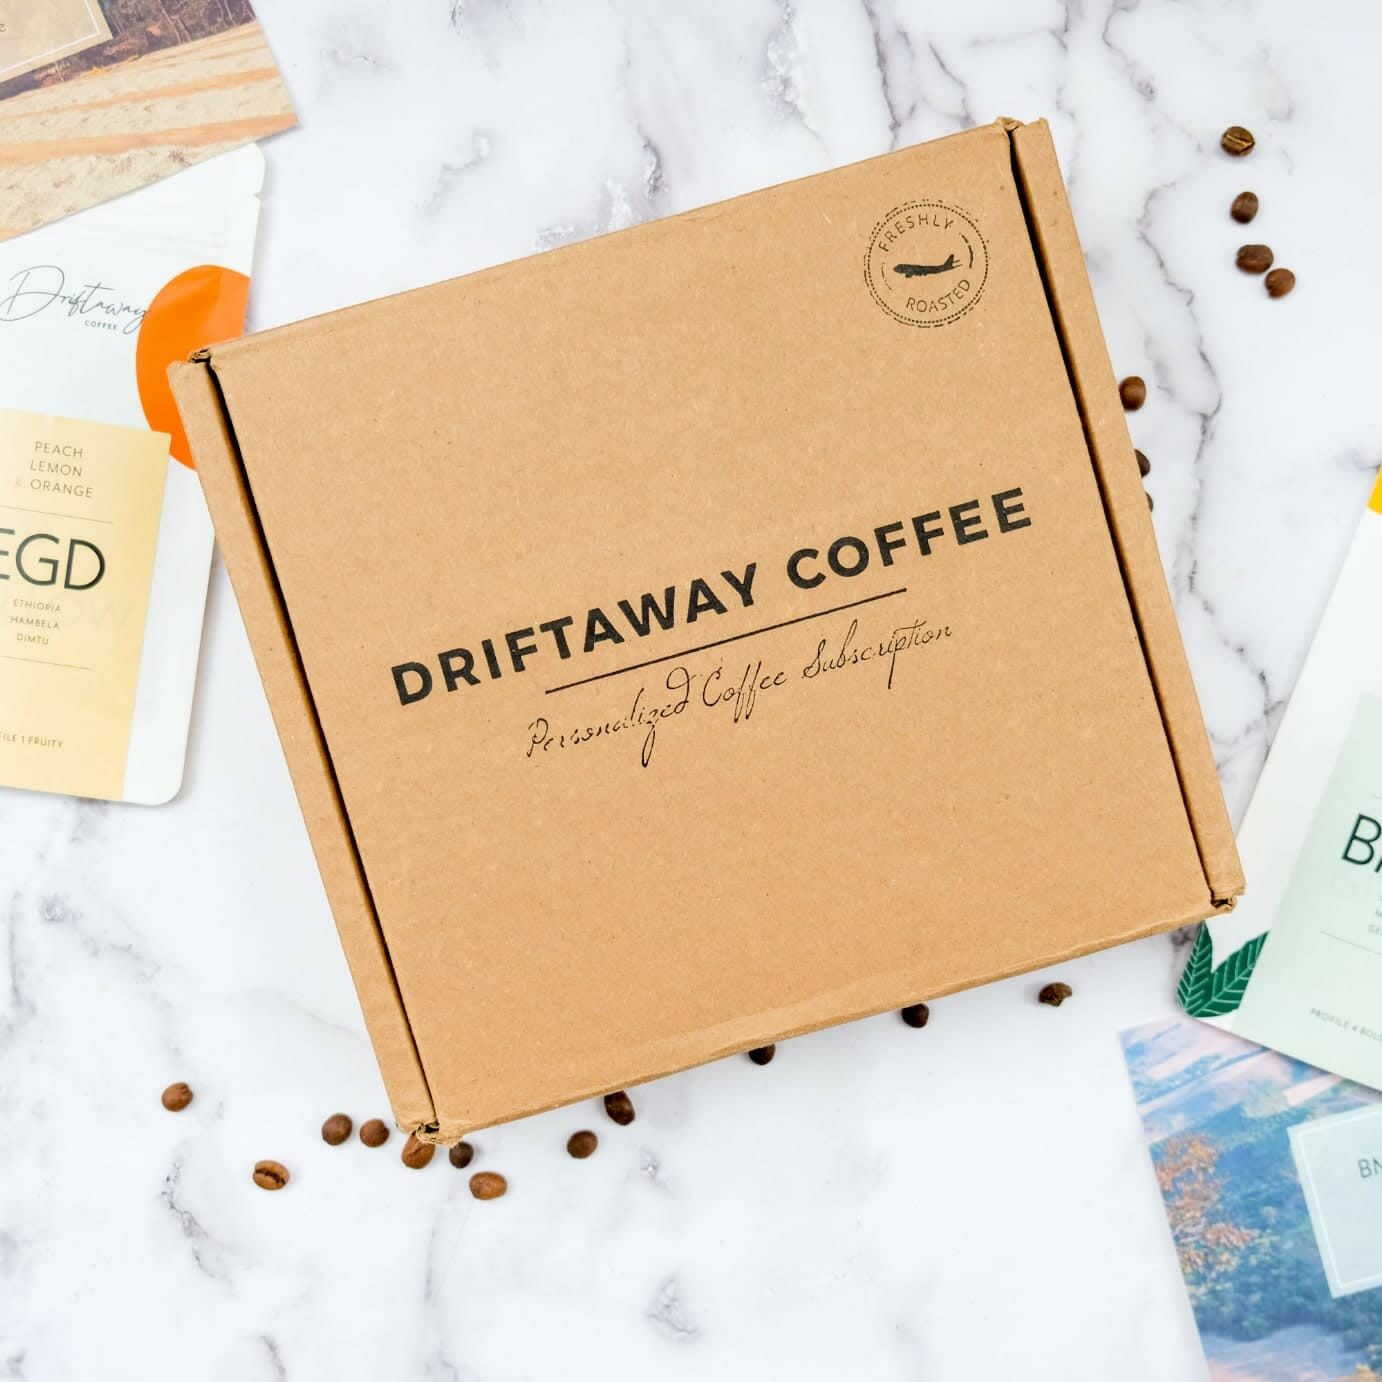 Driftaway Coffee box